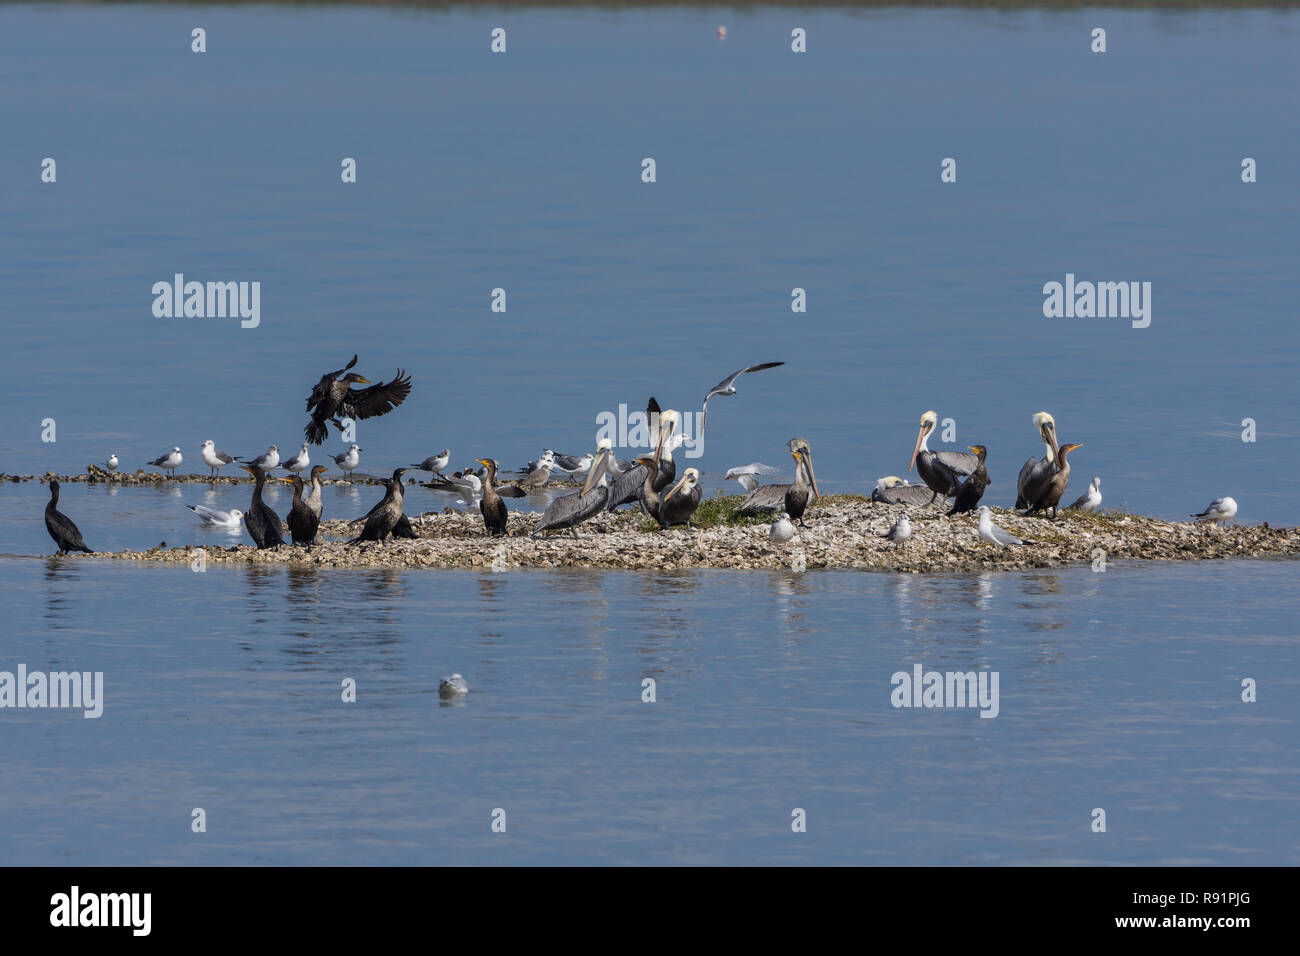 Braune Pelikane (Pelecanus occidentalis) und andere Wasservögel auf einer Oyster Reef. Aransas National Wildlife Refuge, Texas, USA. Stockfoto